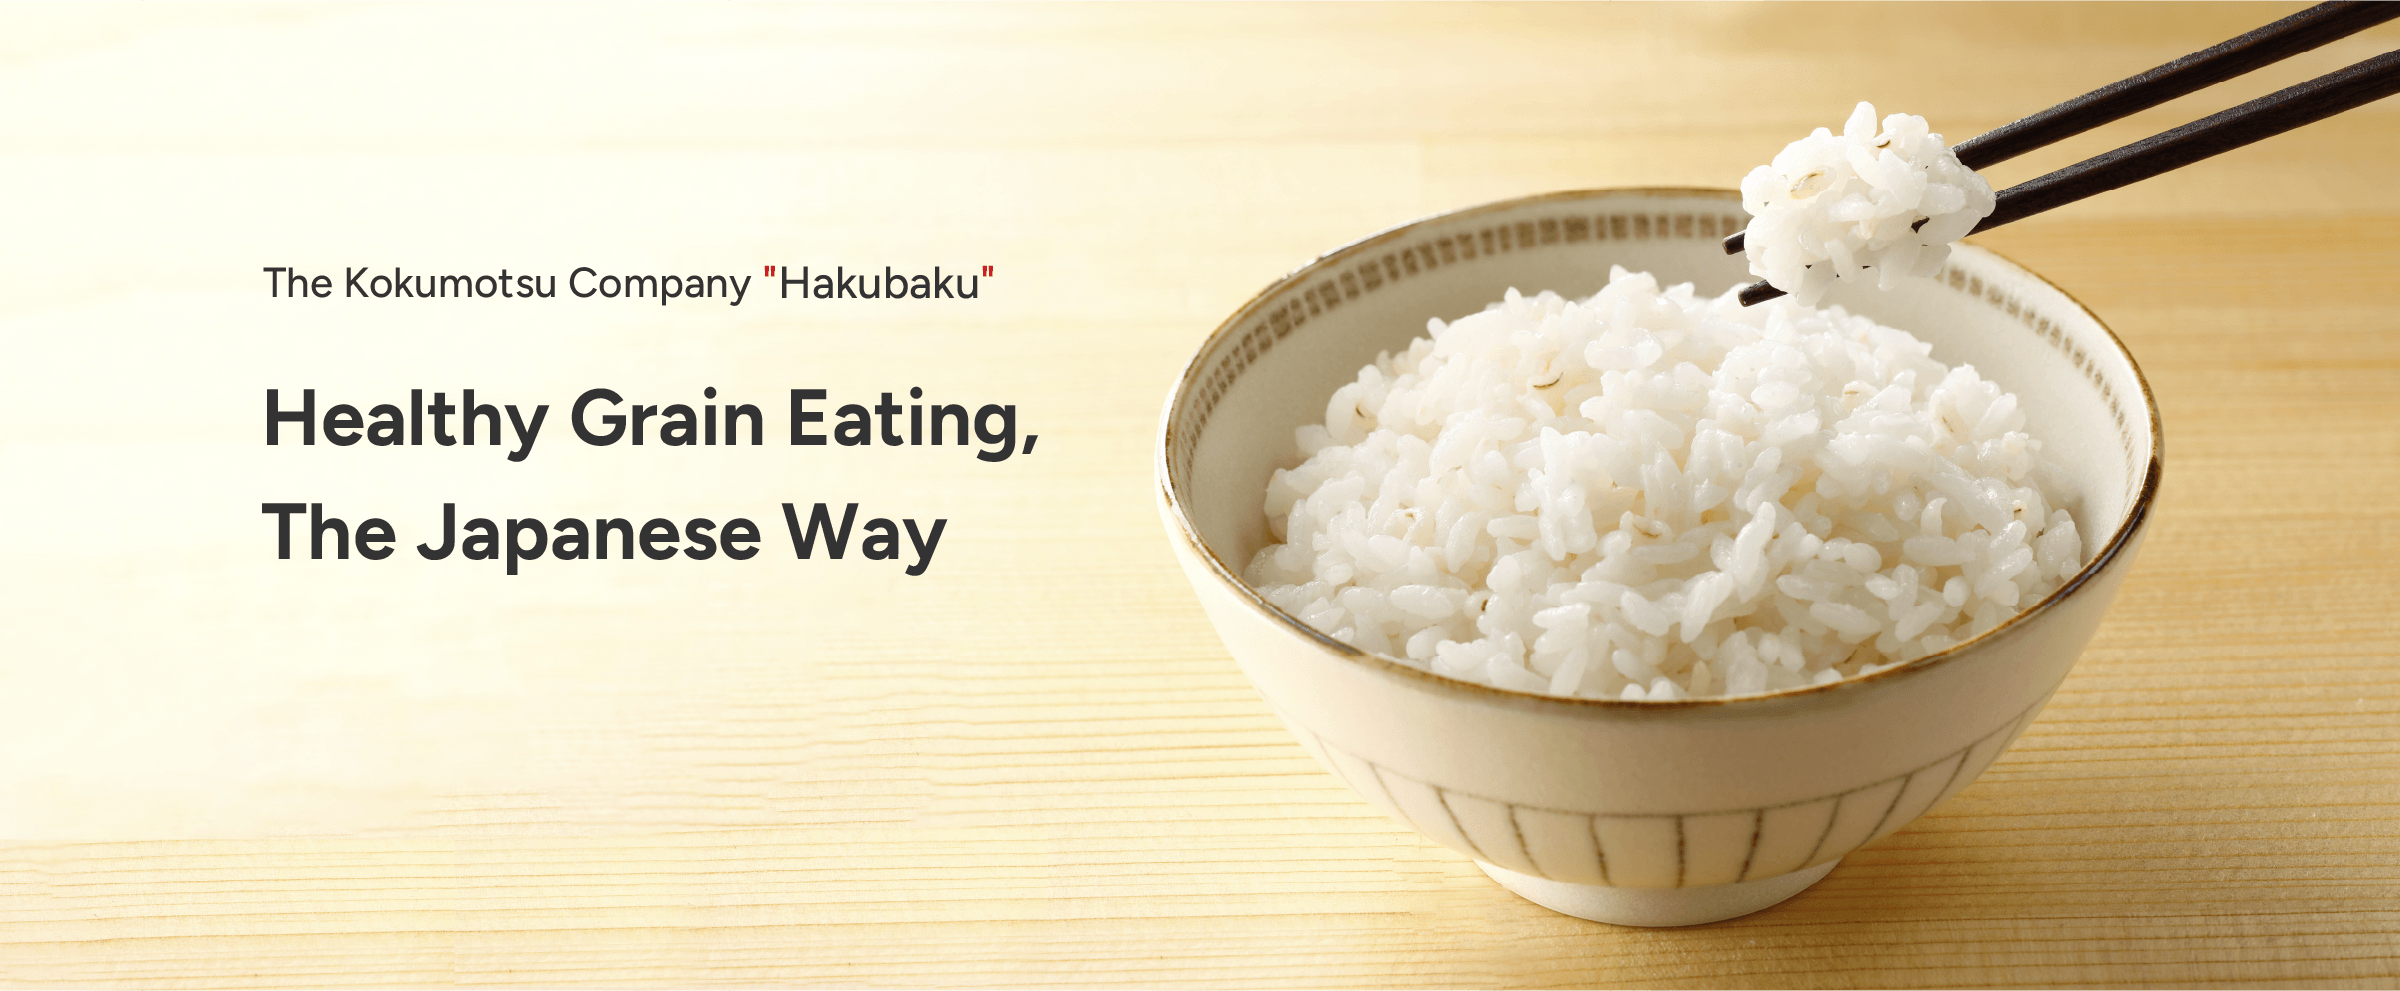 The Kokumotsu Company Hakubaku Healthy Grain Eating, The Japanese Way